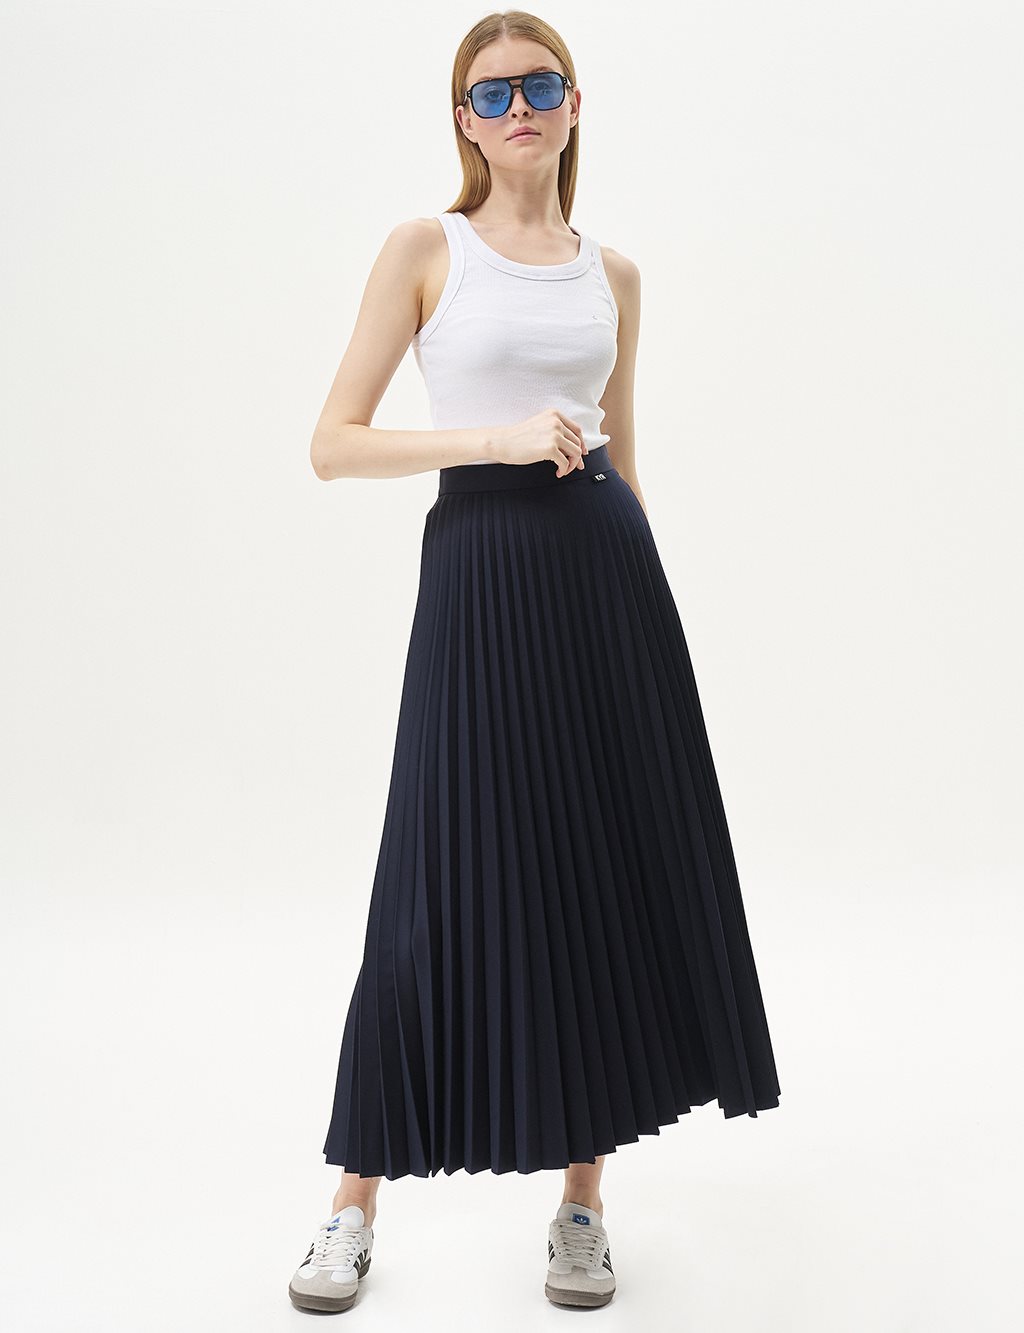 Elastic Waist Pleated Skirt Dark Navy Blue